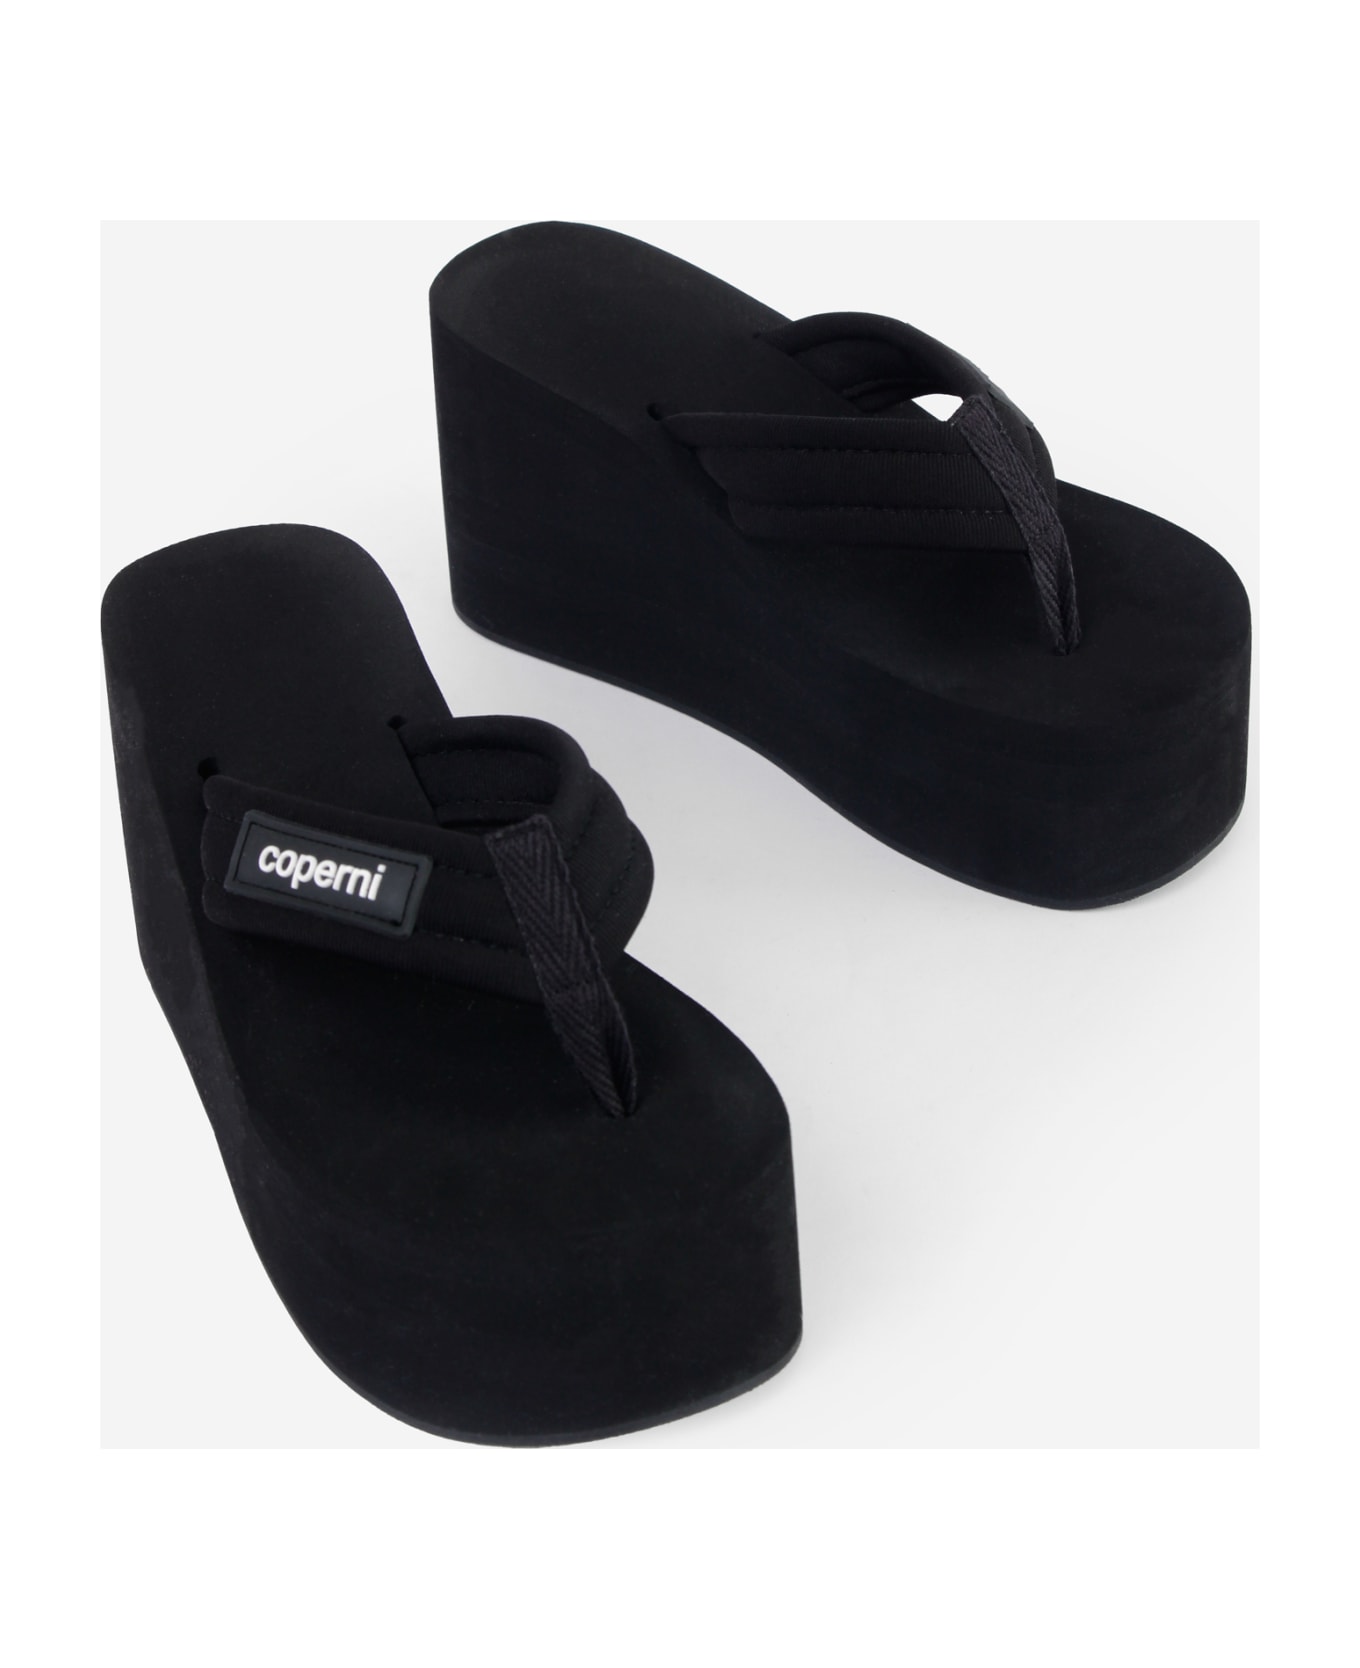 Coperni Branded Wedge Sandals - Black